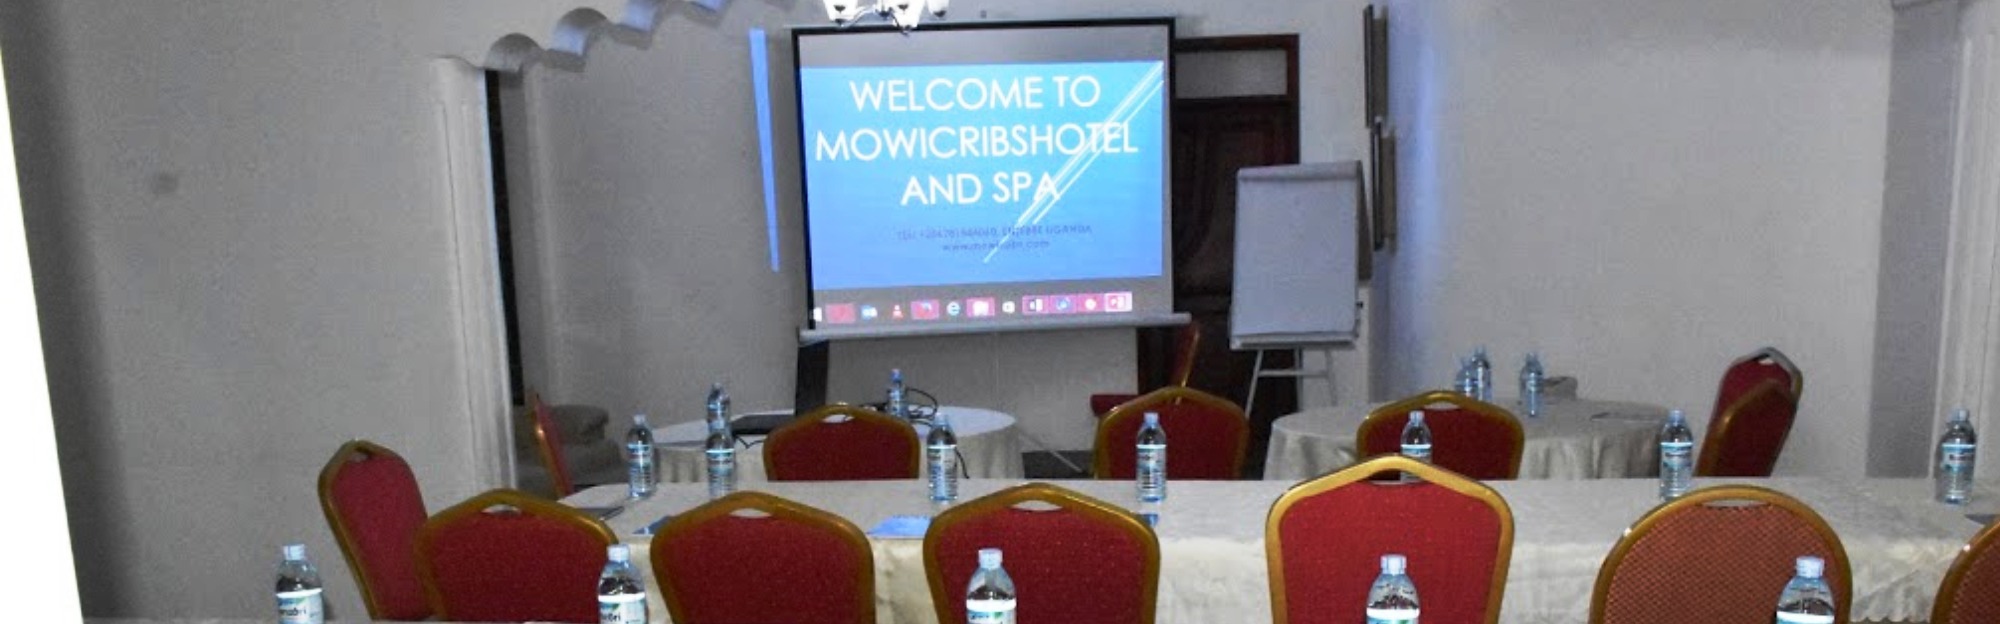 Mowicribs Hotel & Spa Conferences